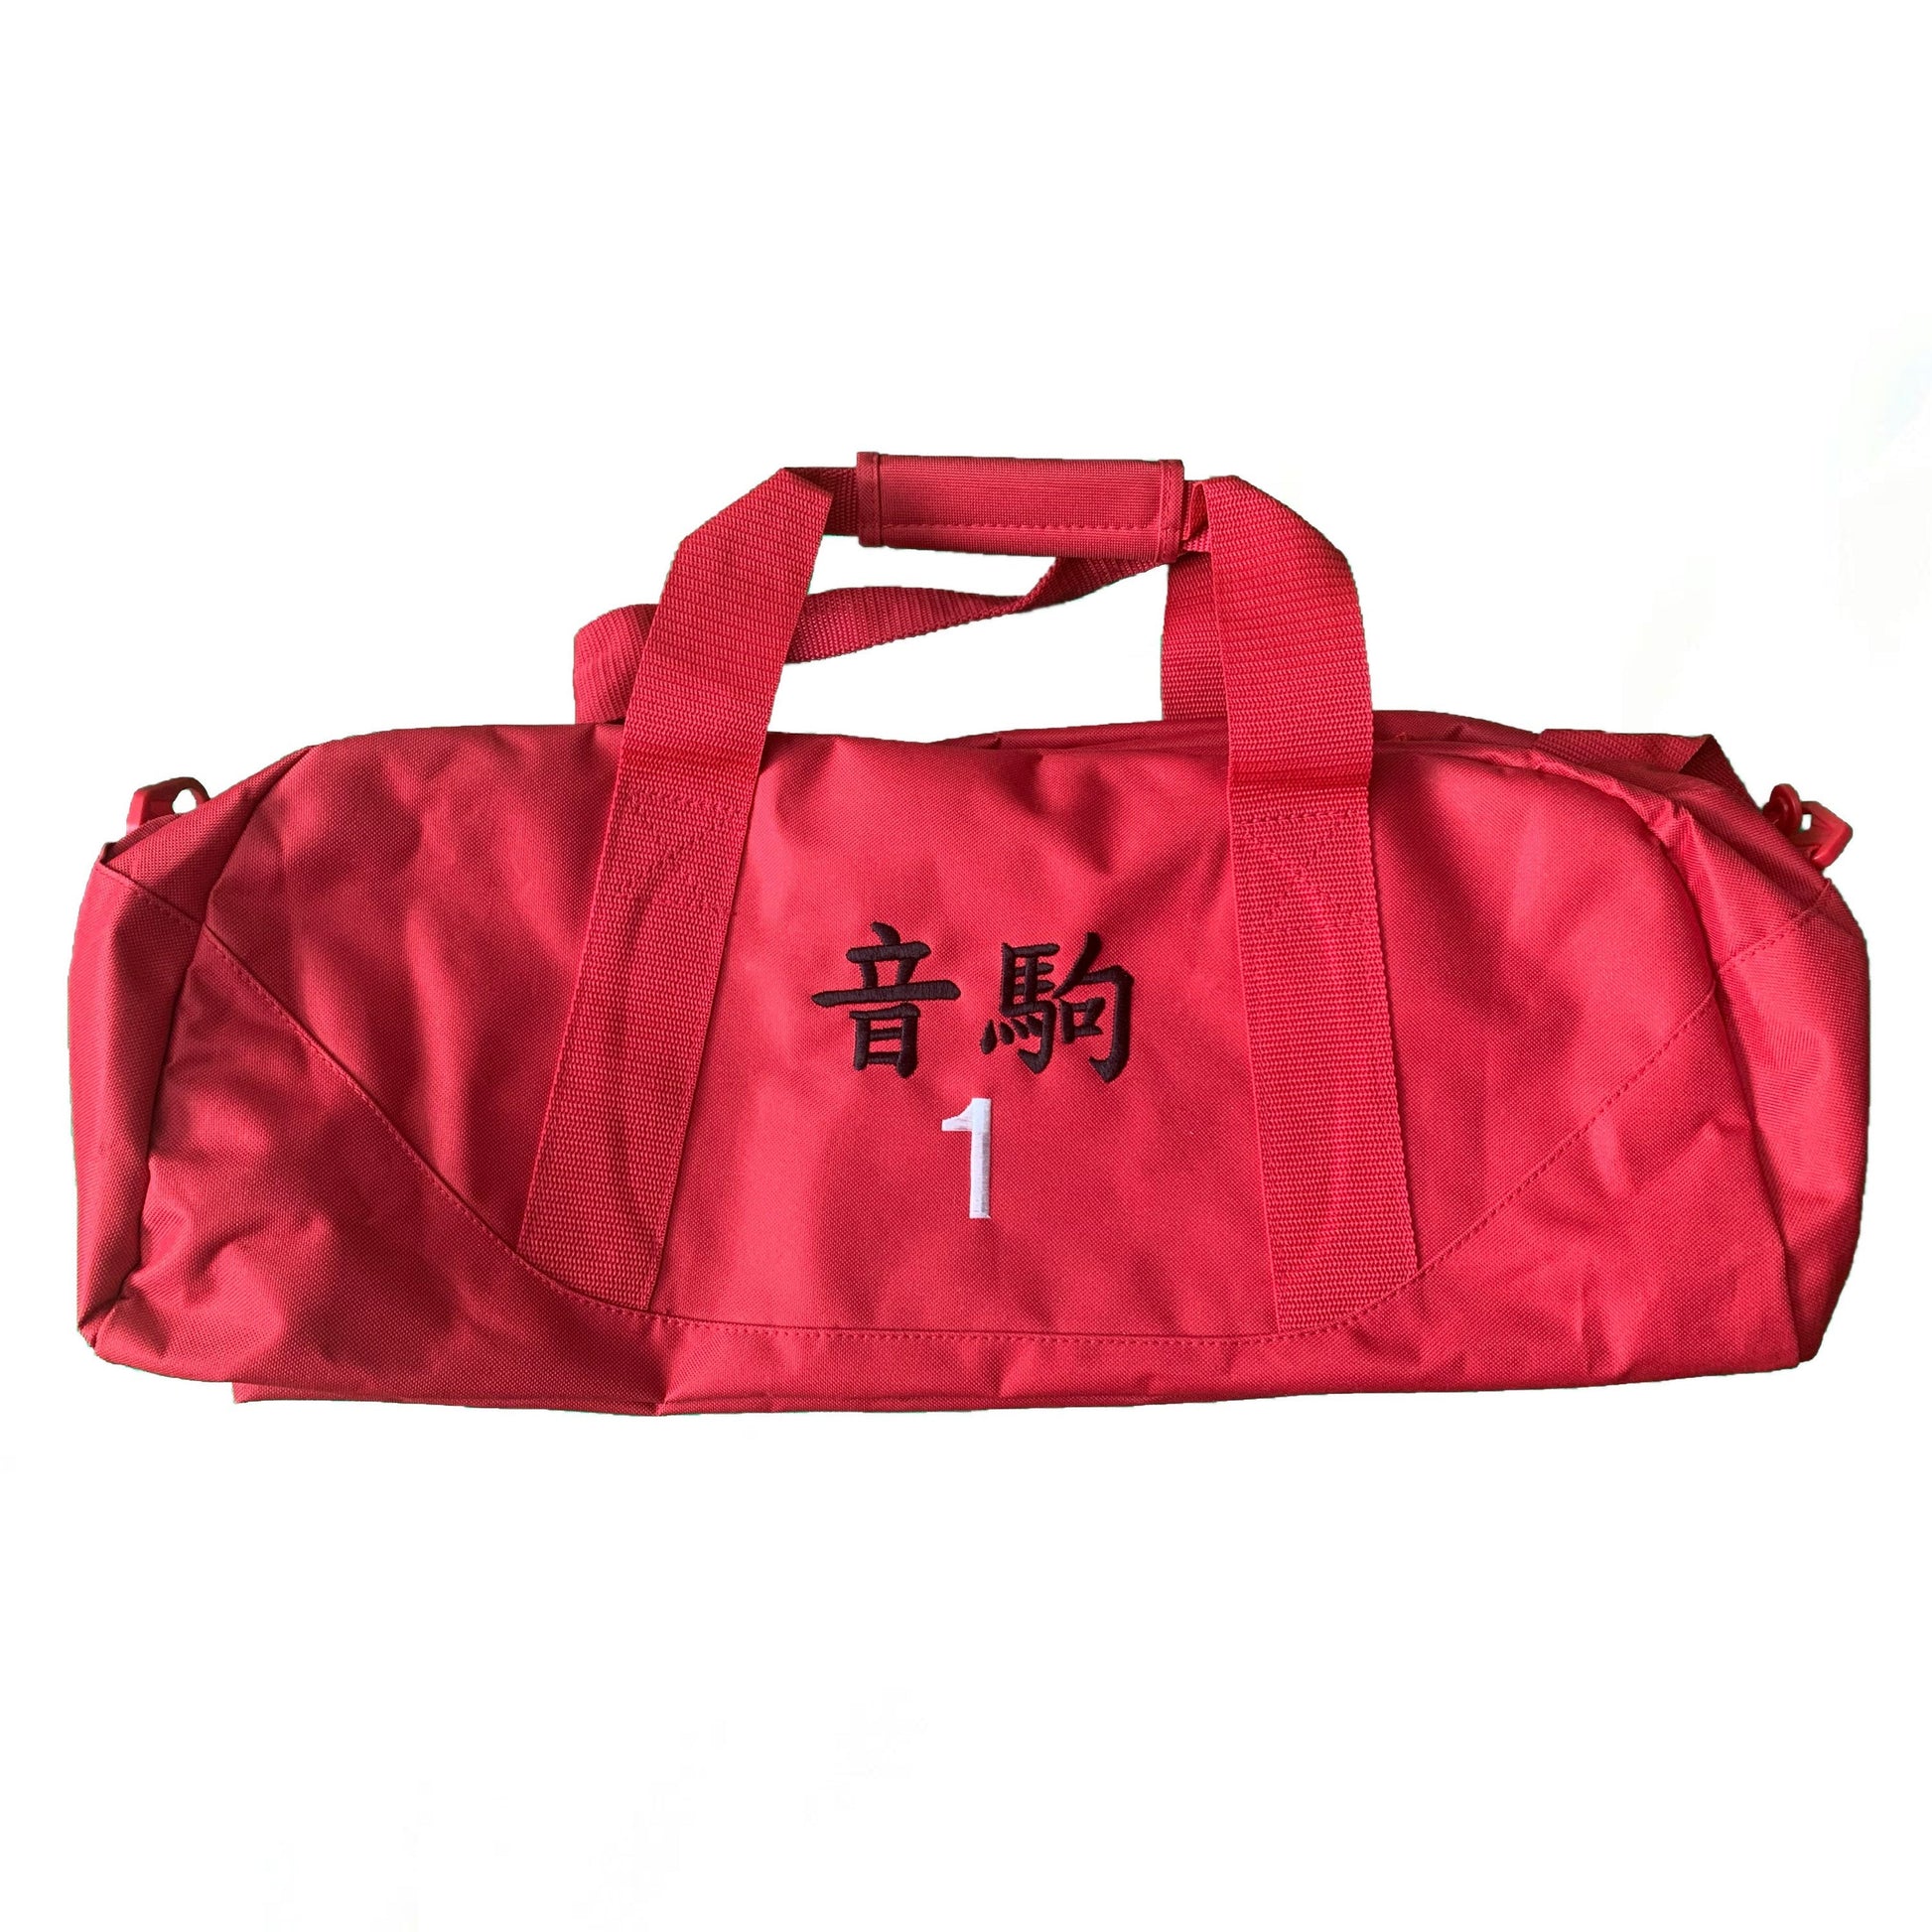 Kuroo Tetsurou Nekoma Luggage Backpack Gym Bag Duffel Kenma Kozume Lev Haiba